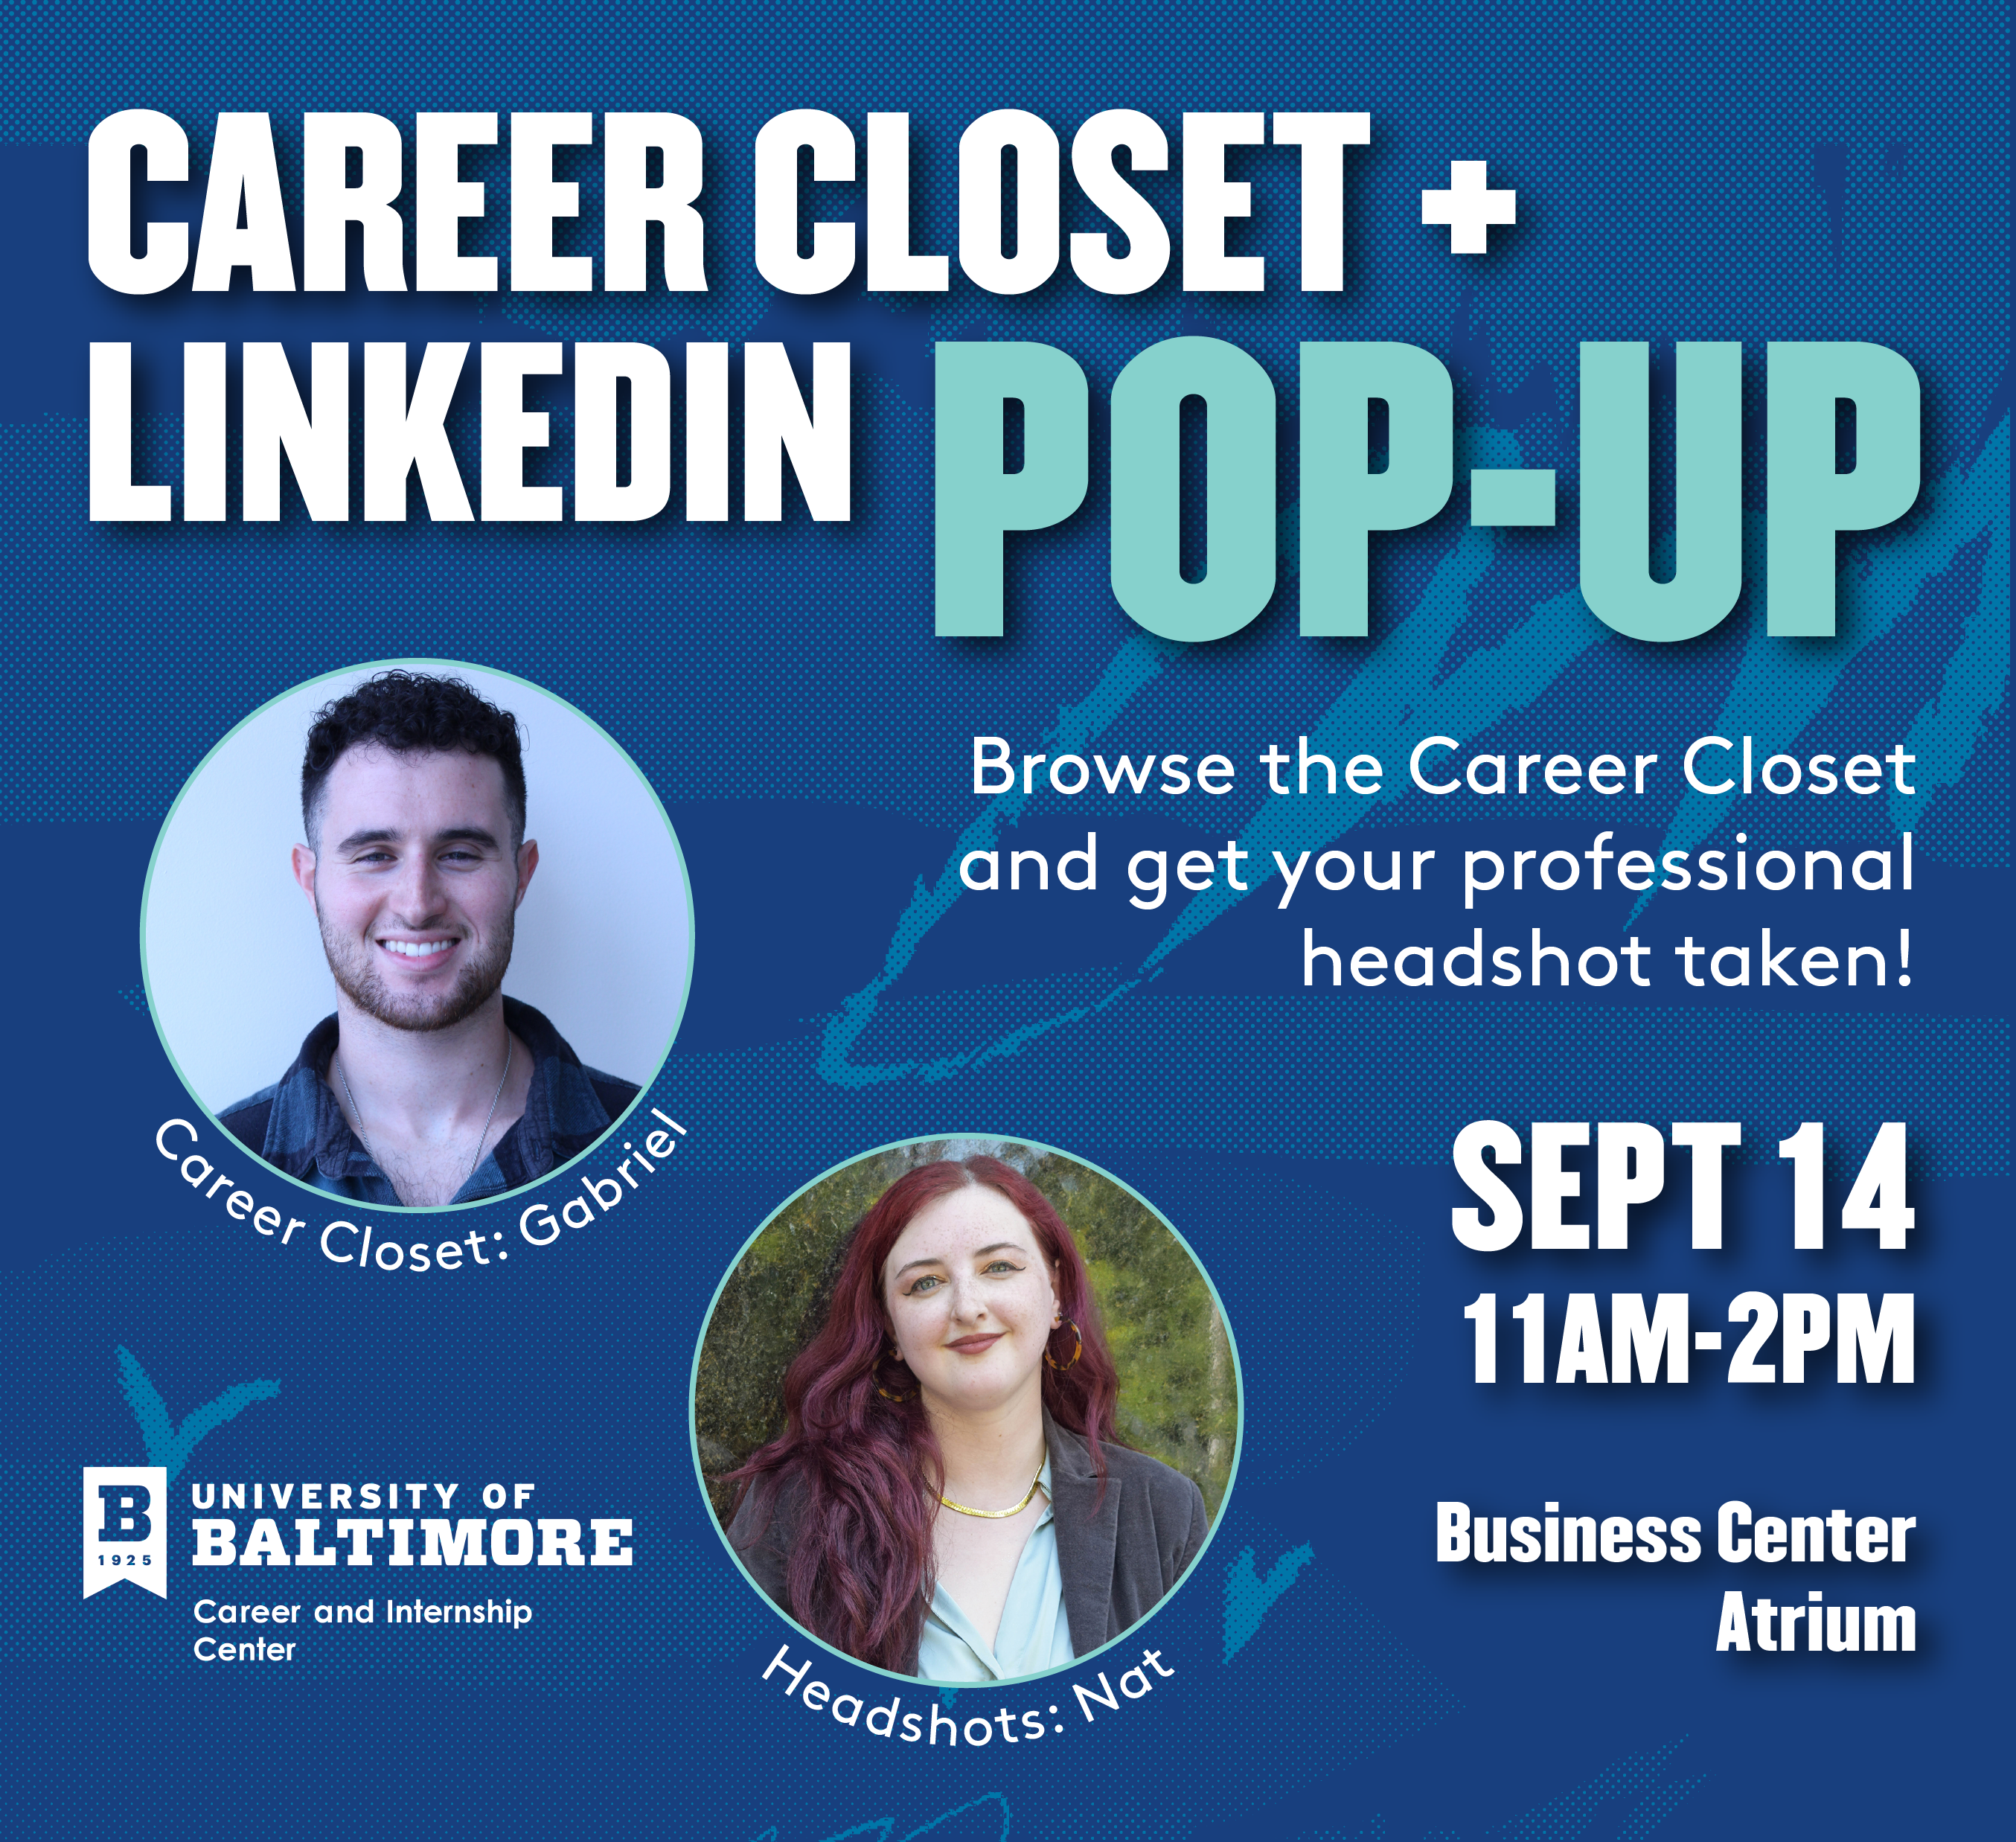 Career Closet + LinkedIn Headshot Popup